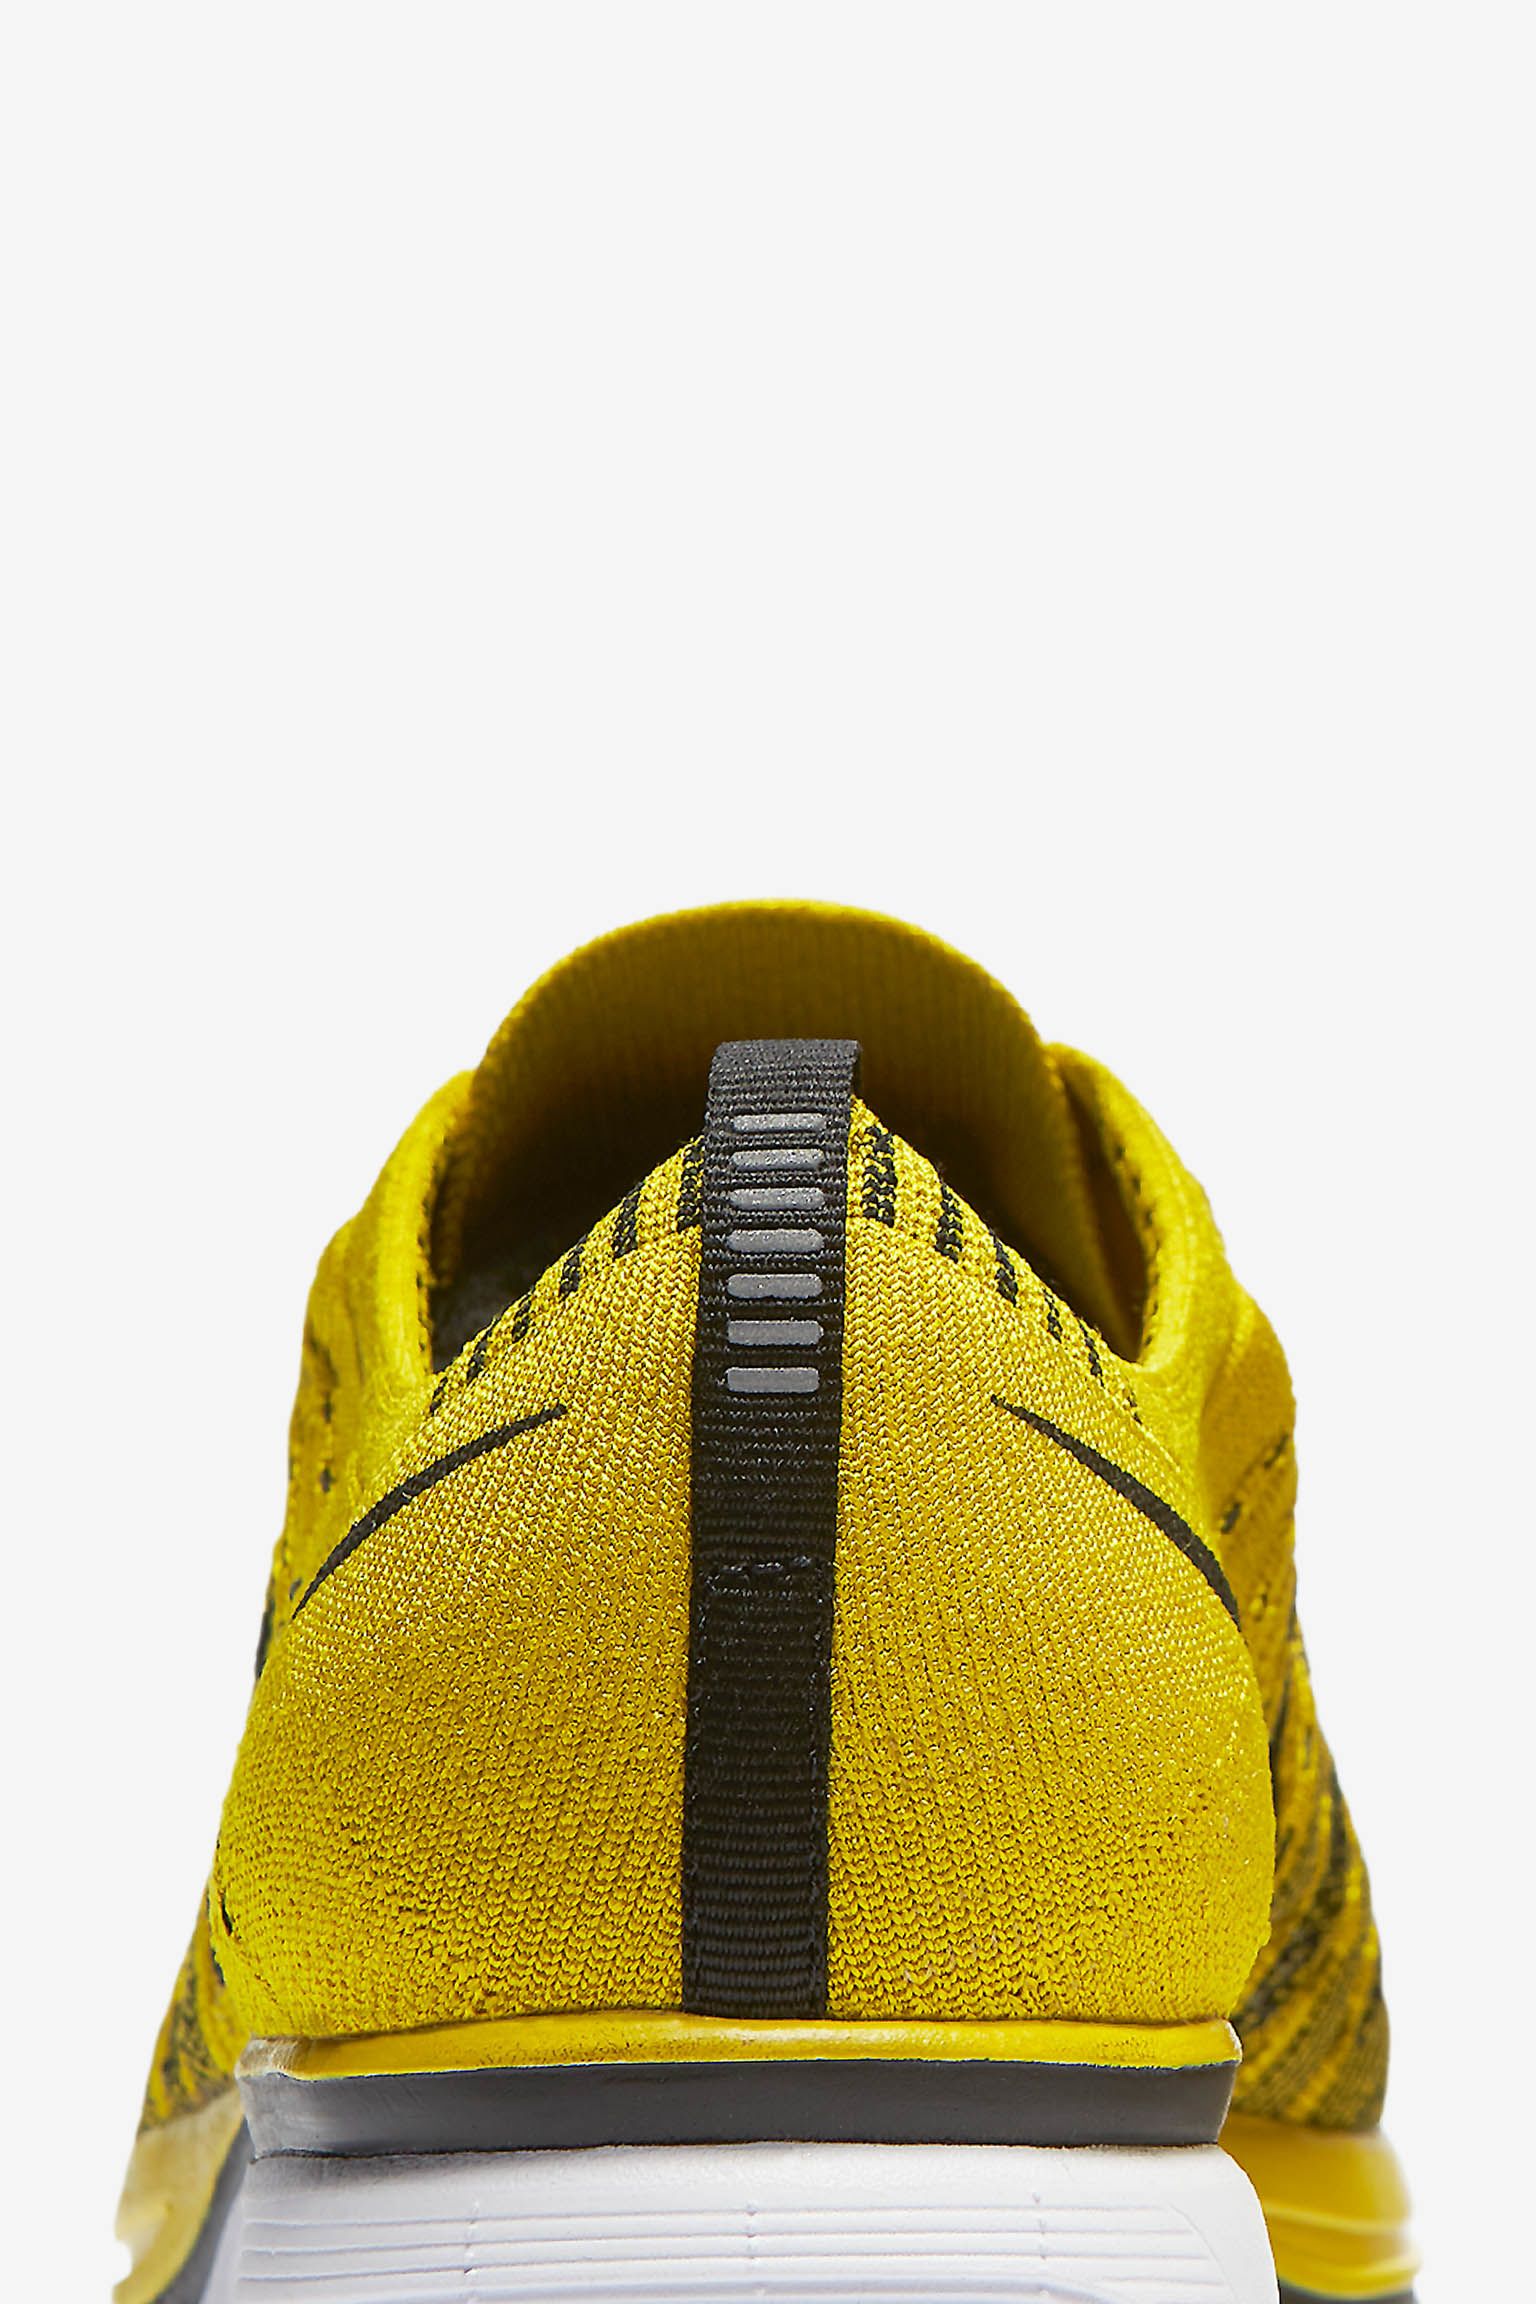 Nike Flyknit Trainer 'Citron'. Nike⁠+ Launch GB